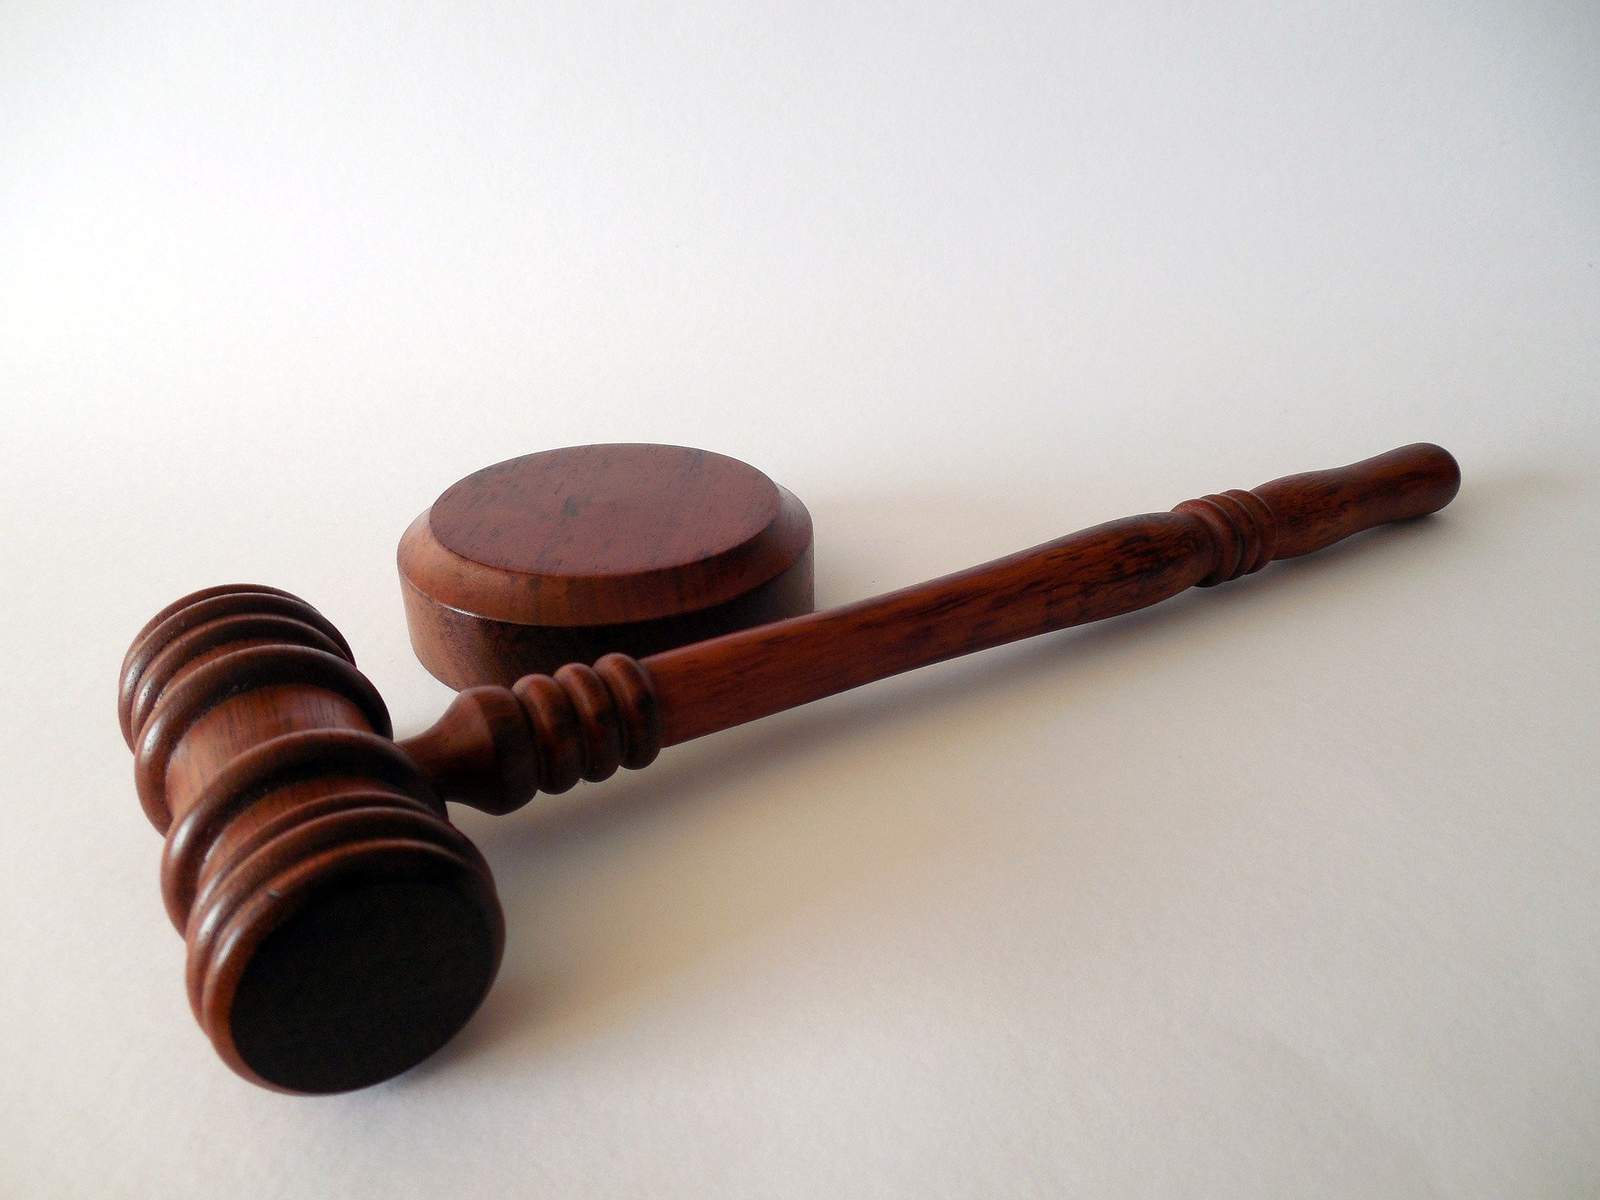 Florida Senate weighs legal immunity against COVID lawsuits